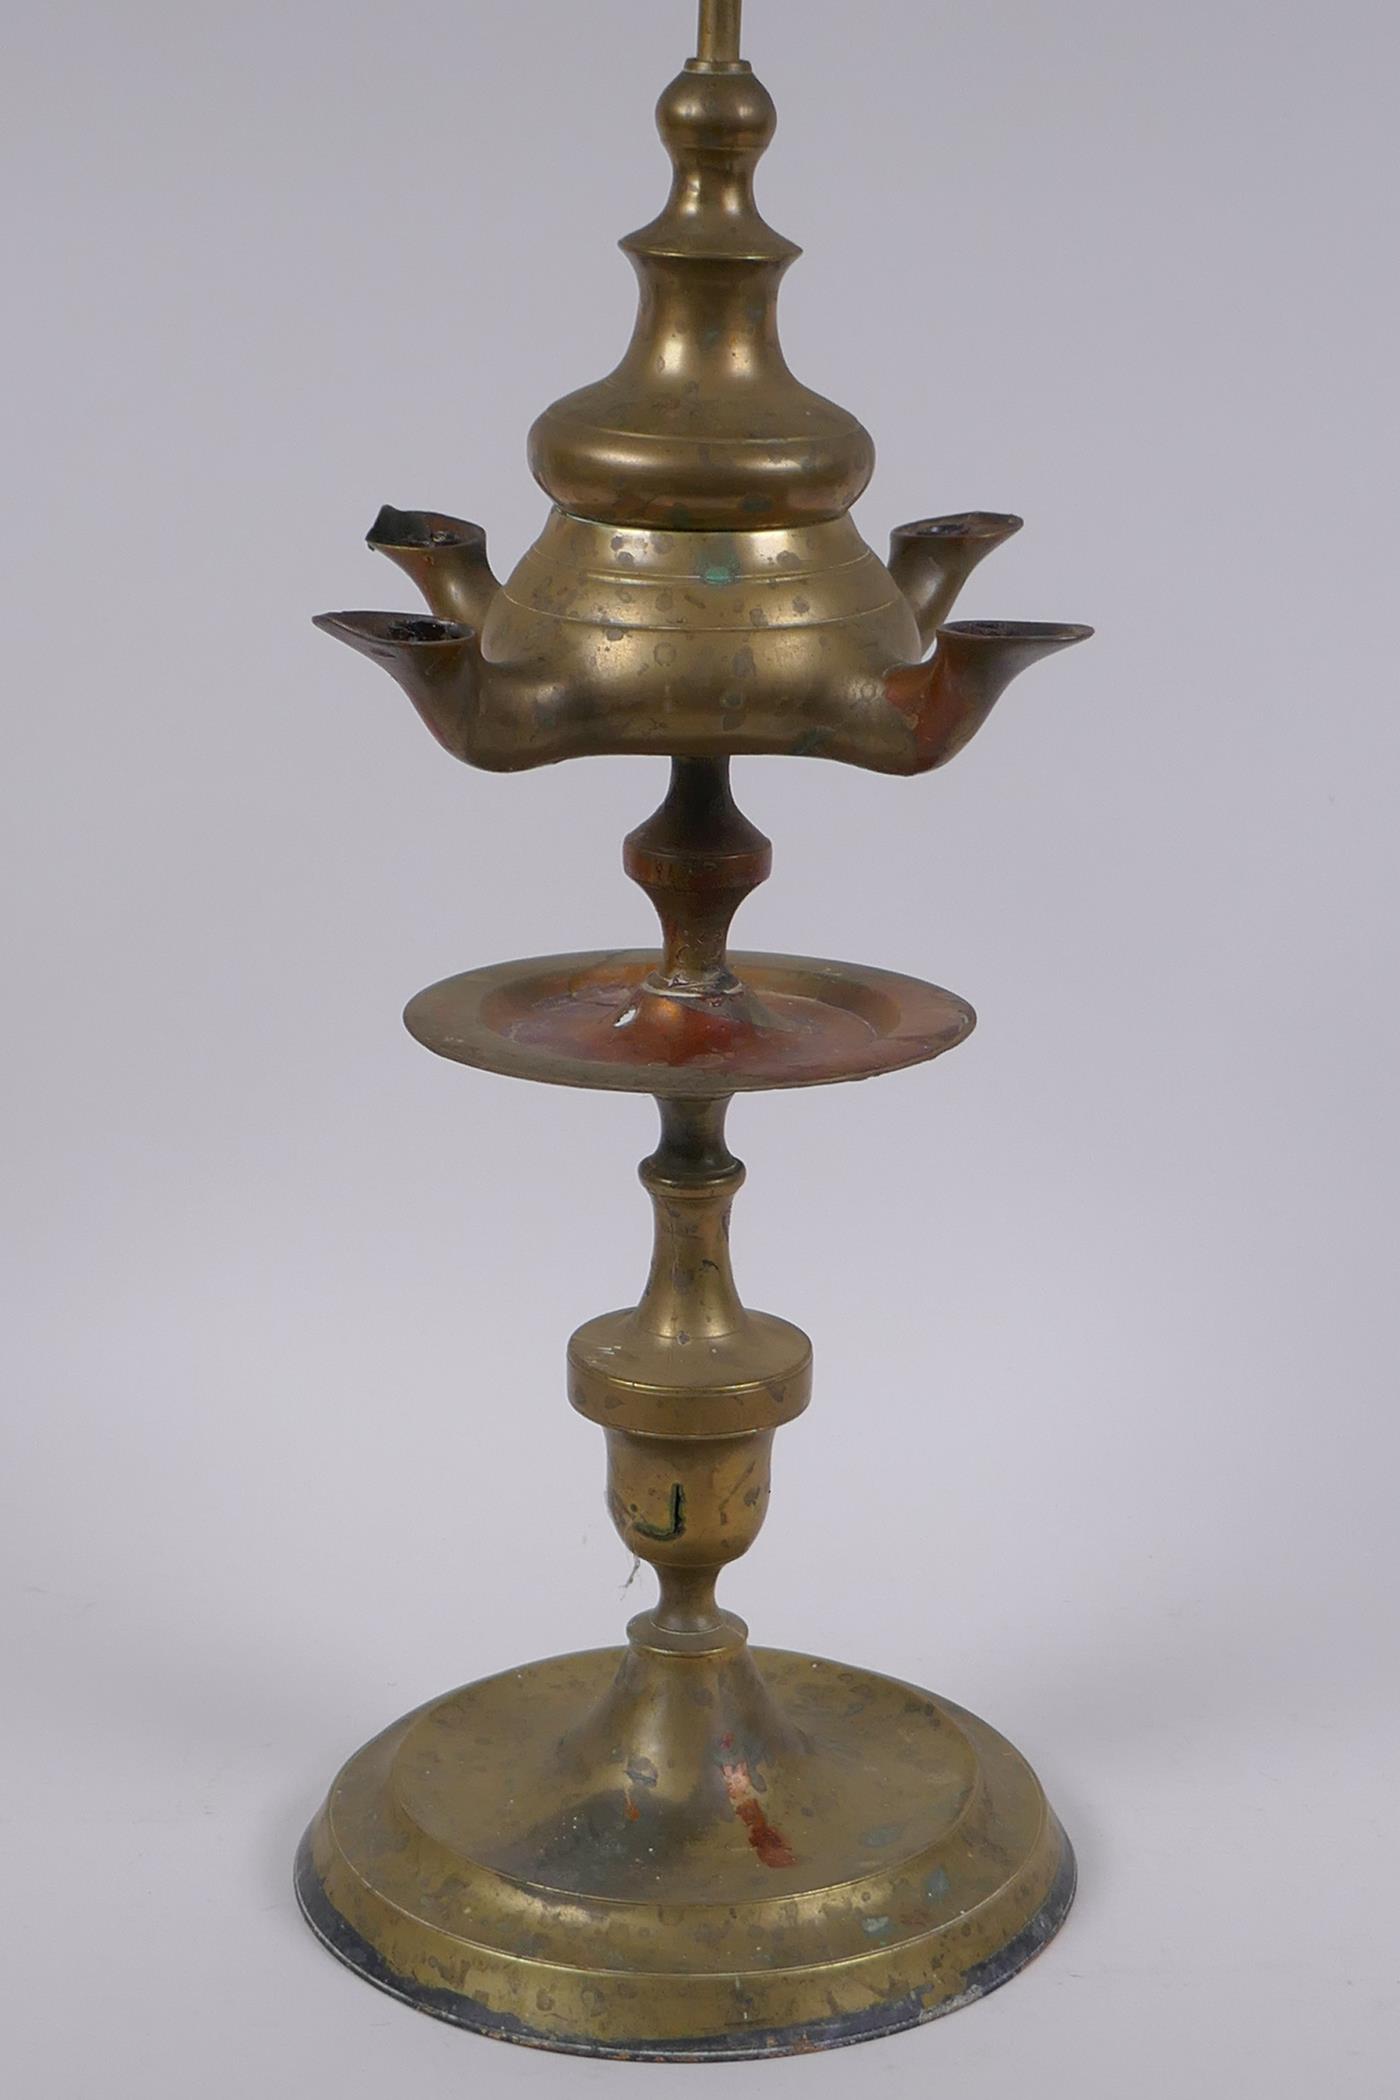 An antique brass four spout whale oil lamp, 65cm high - Image 2 of 4